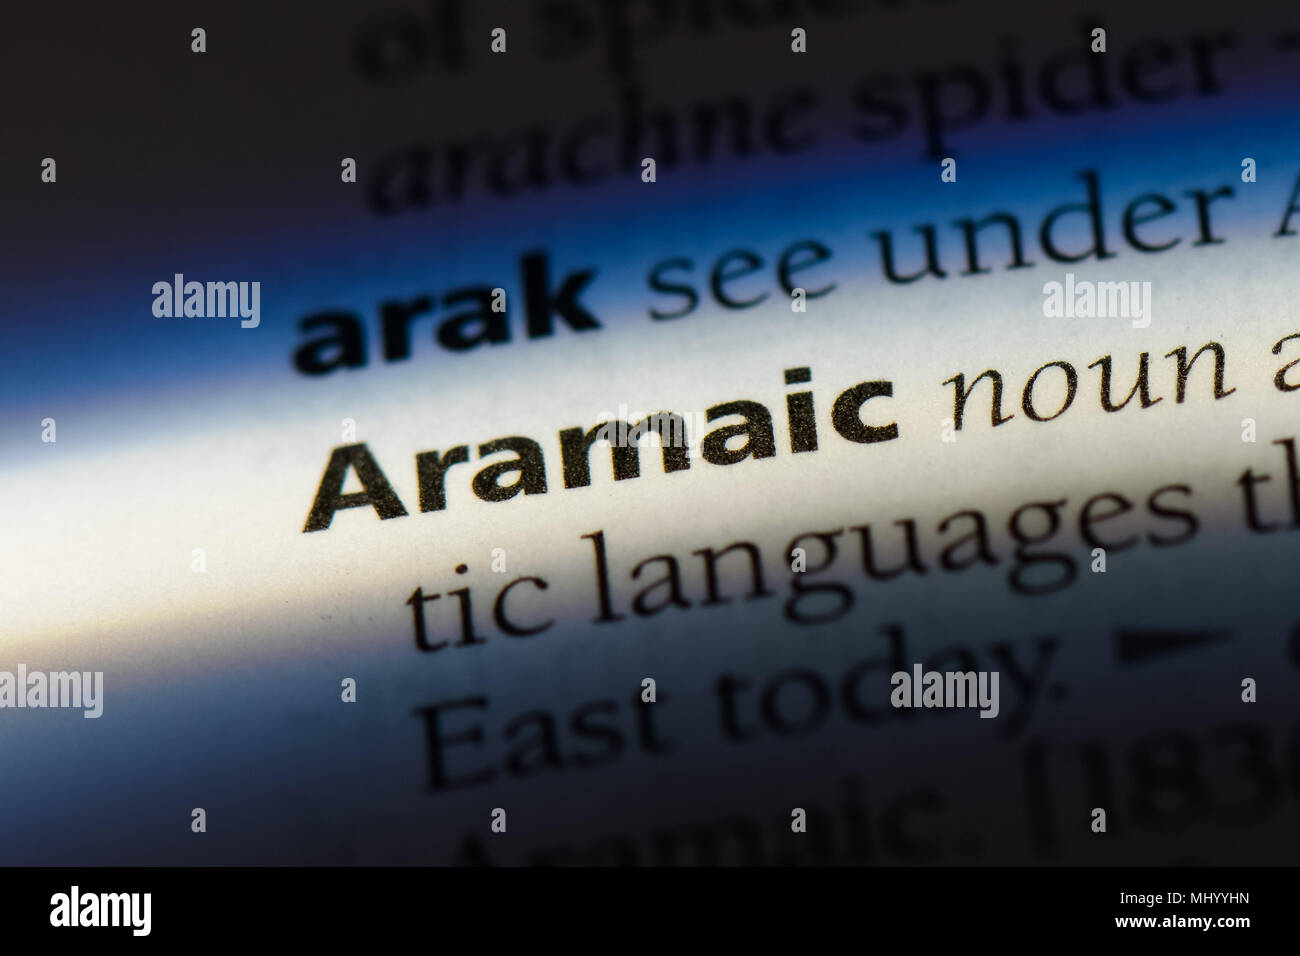 aramaic word in a dictionary. aramaic concept. Stock Photo